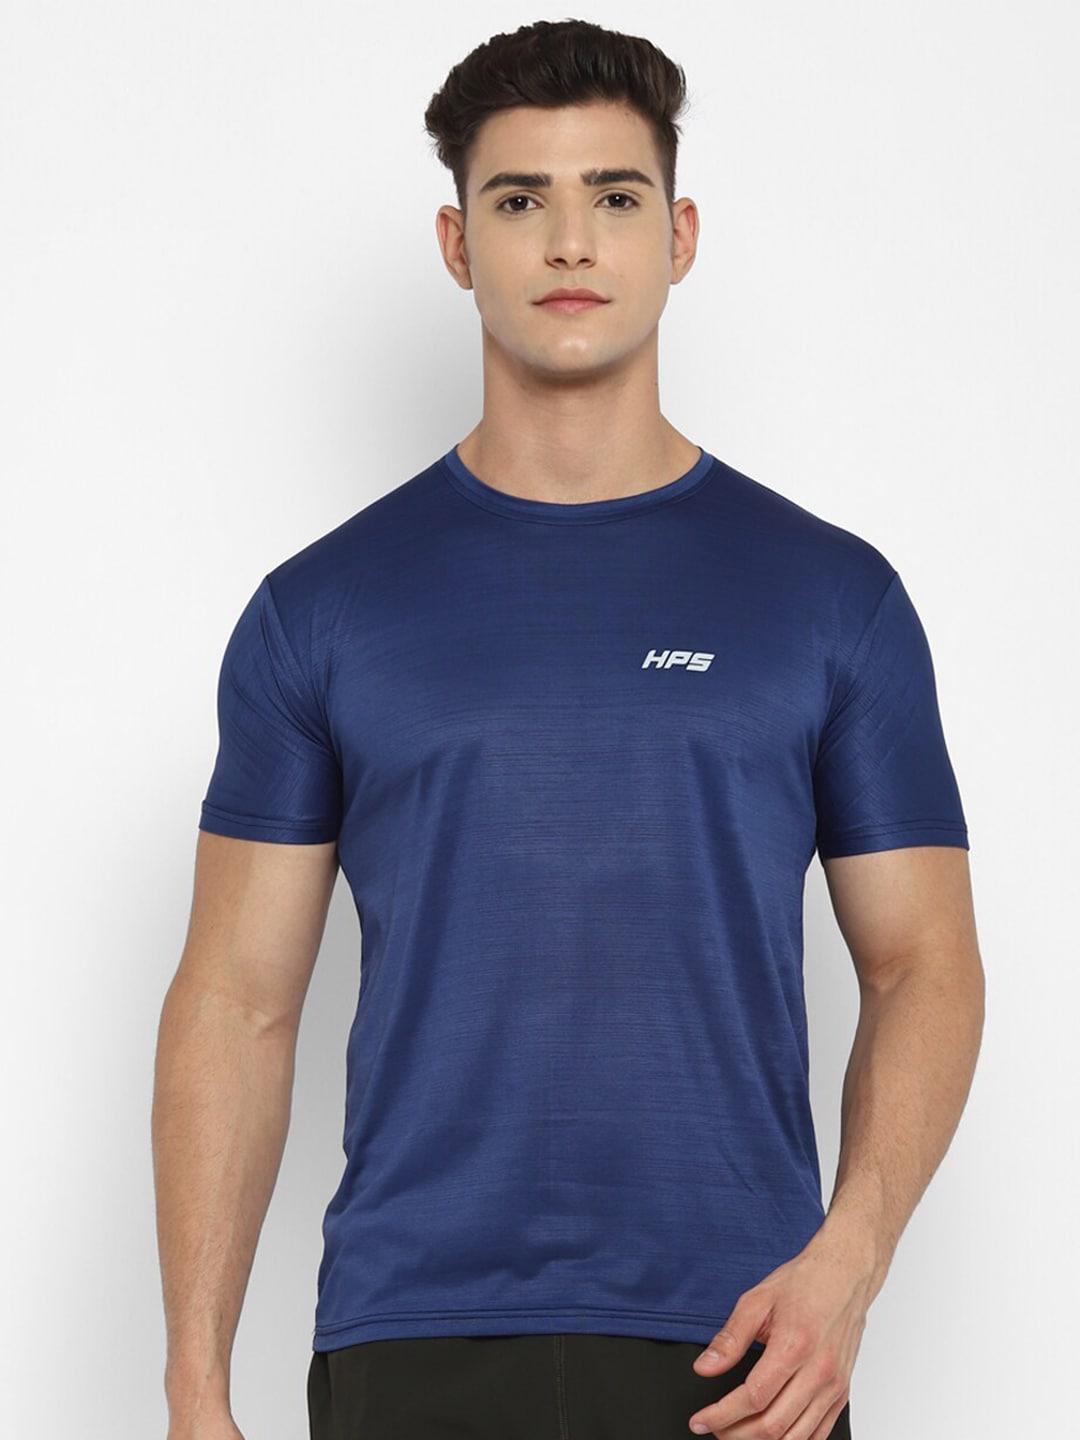 hps-sports-men-navy-blue-solid-running-t-shirt